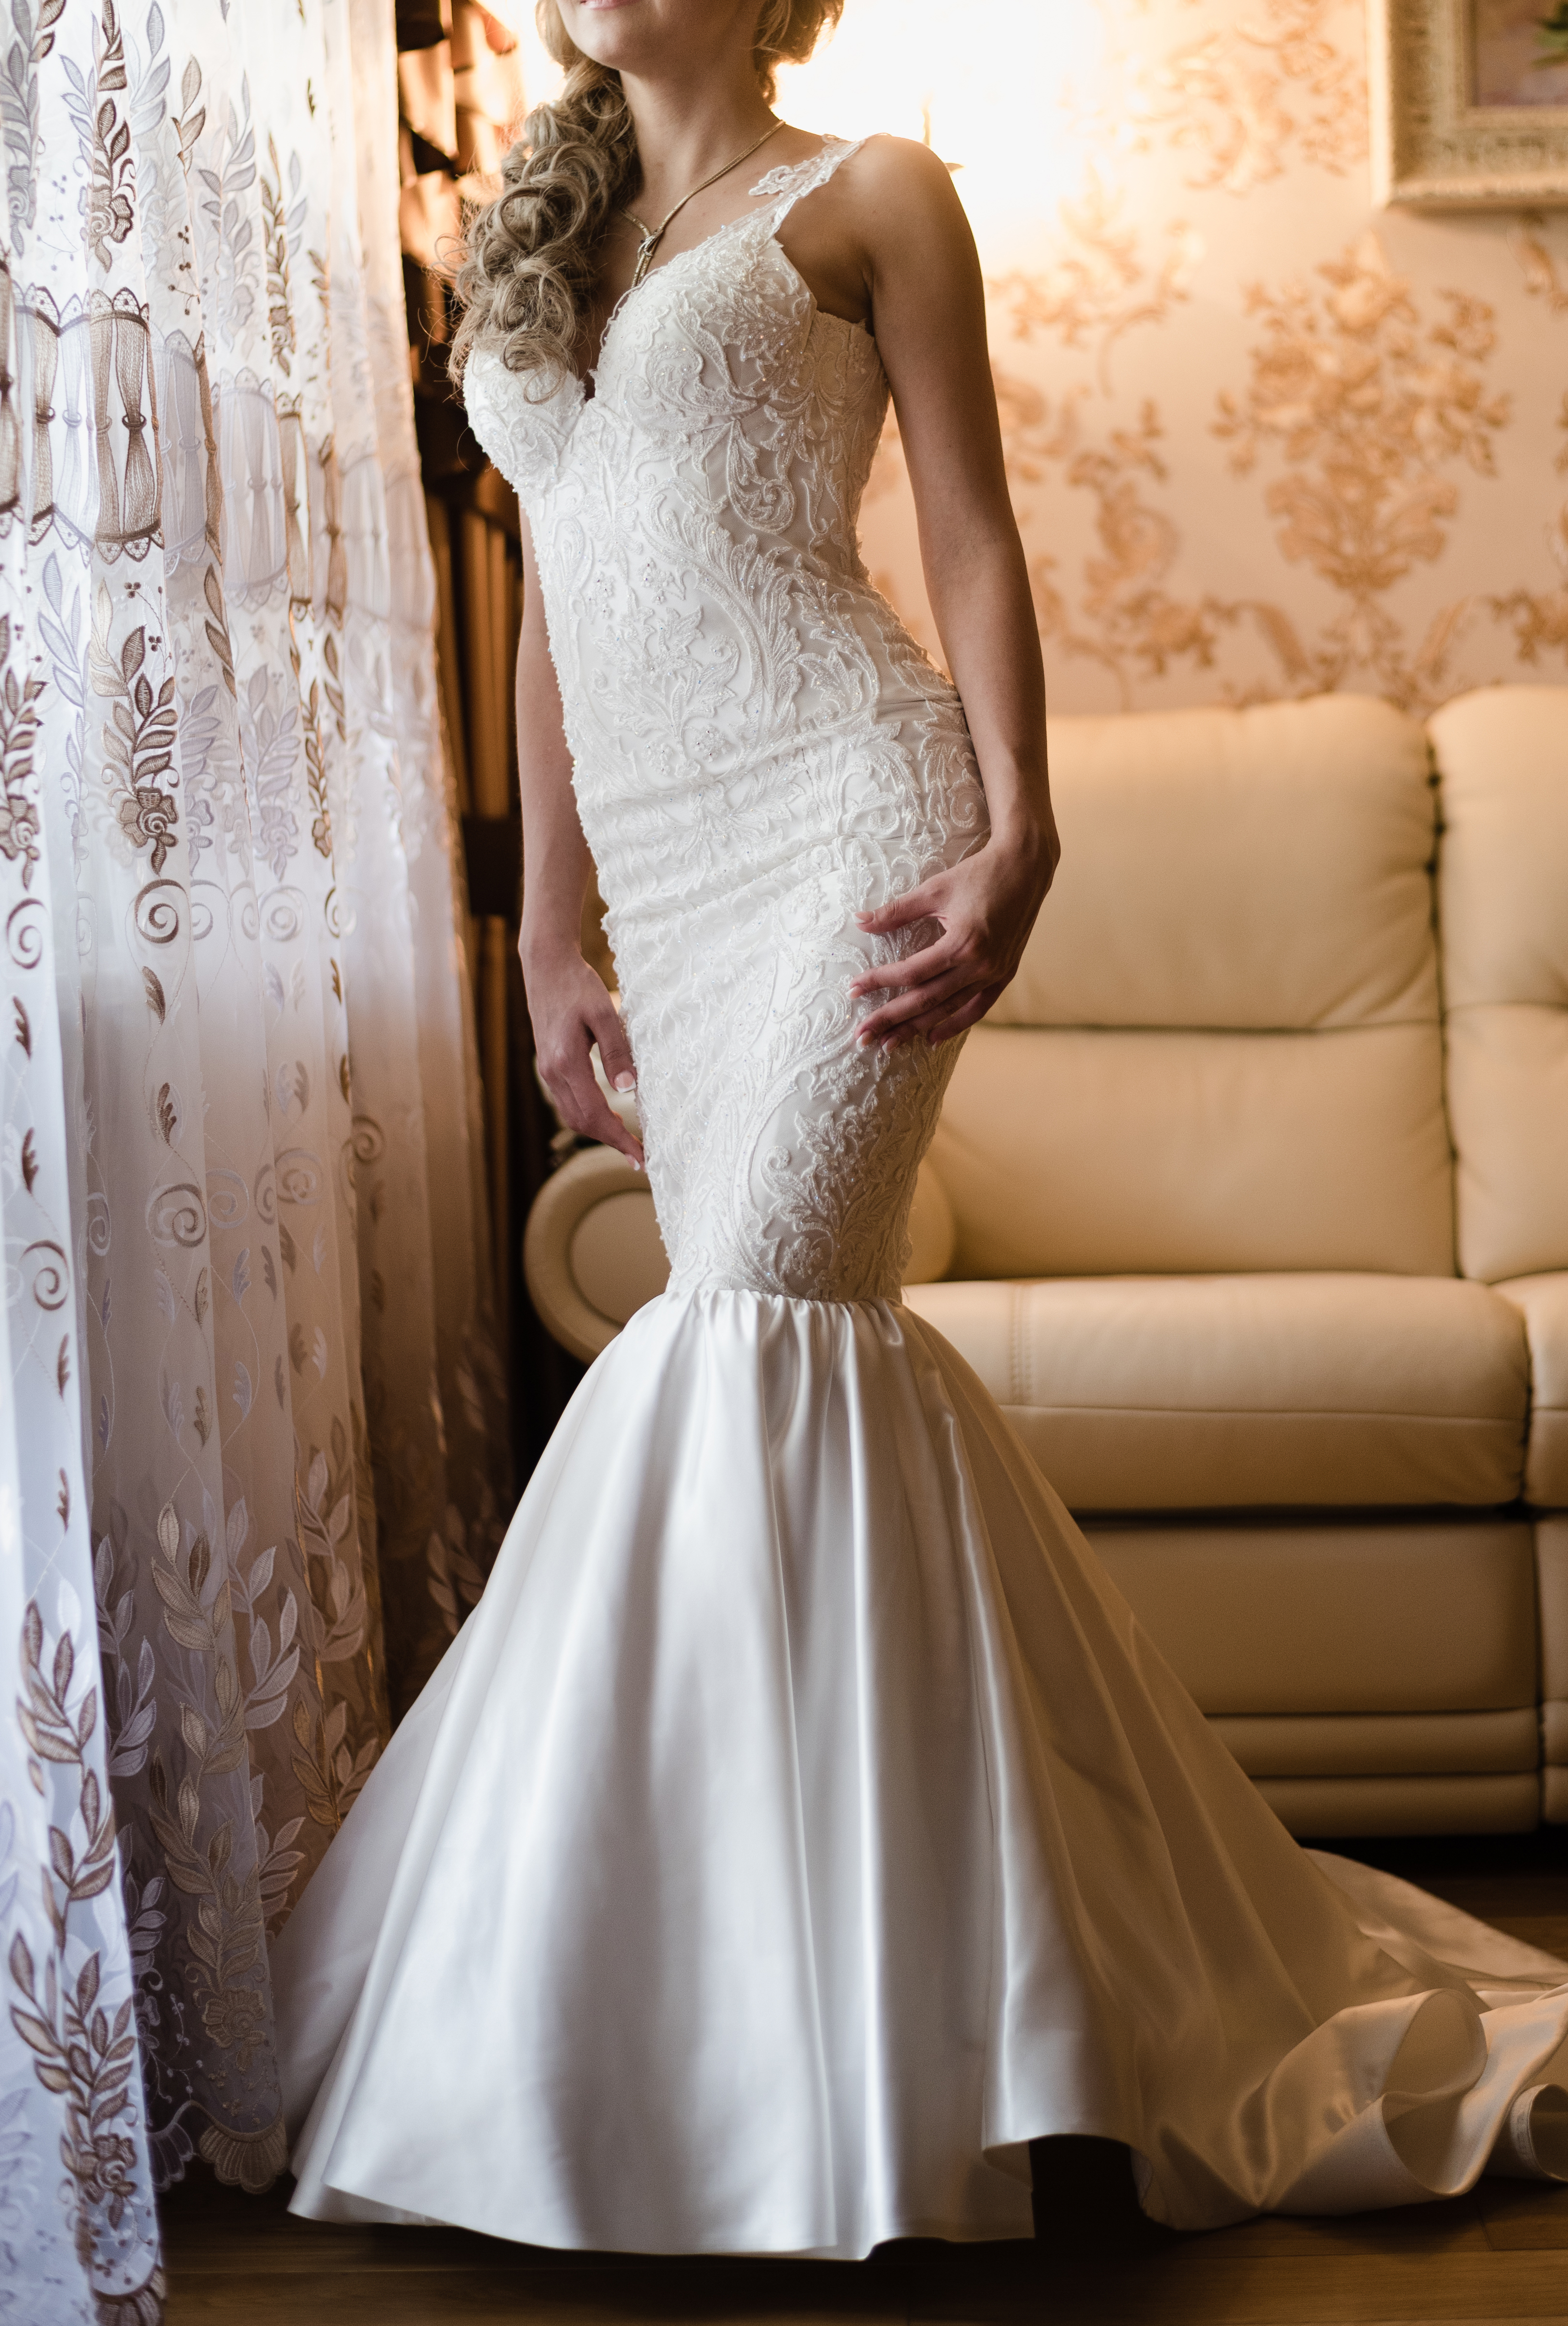 Une mariée en robe de mariée | Source : Shutterstock